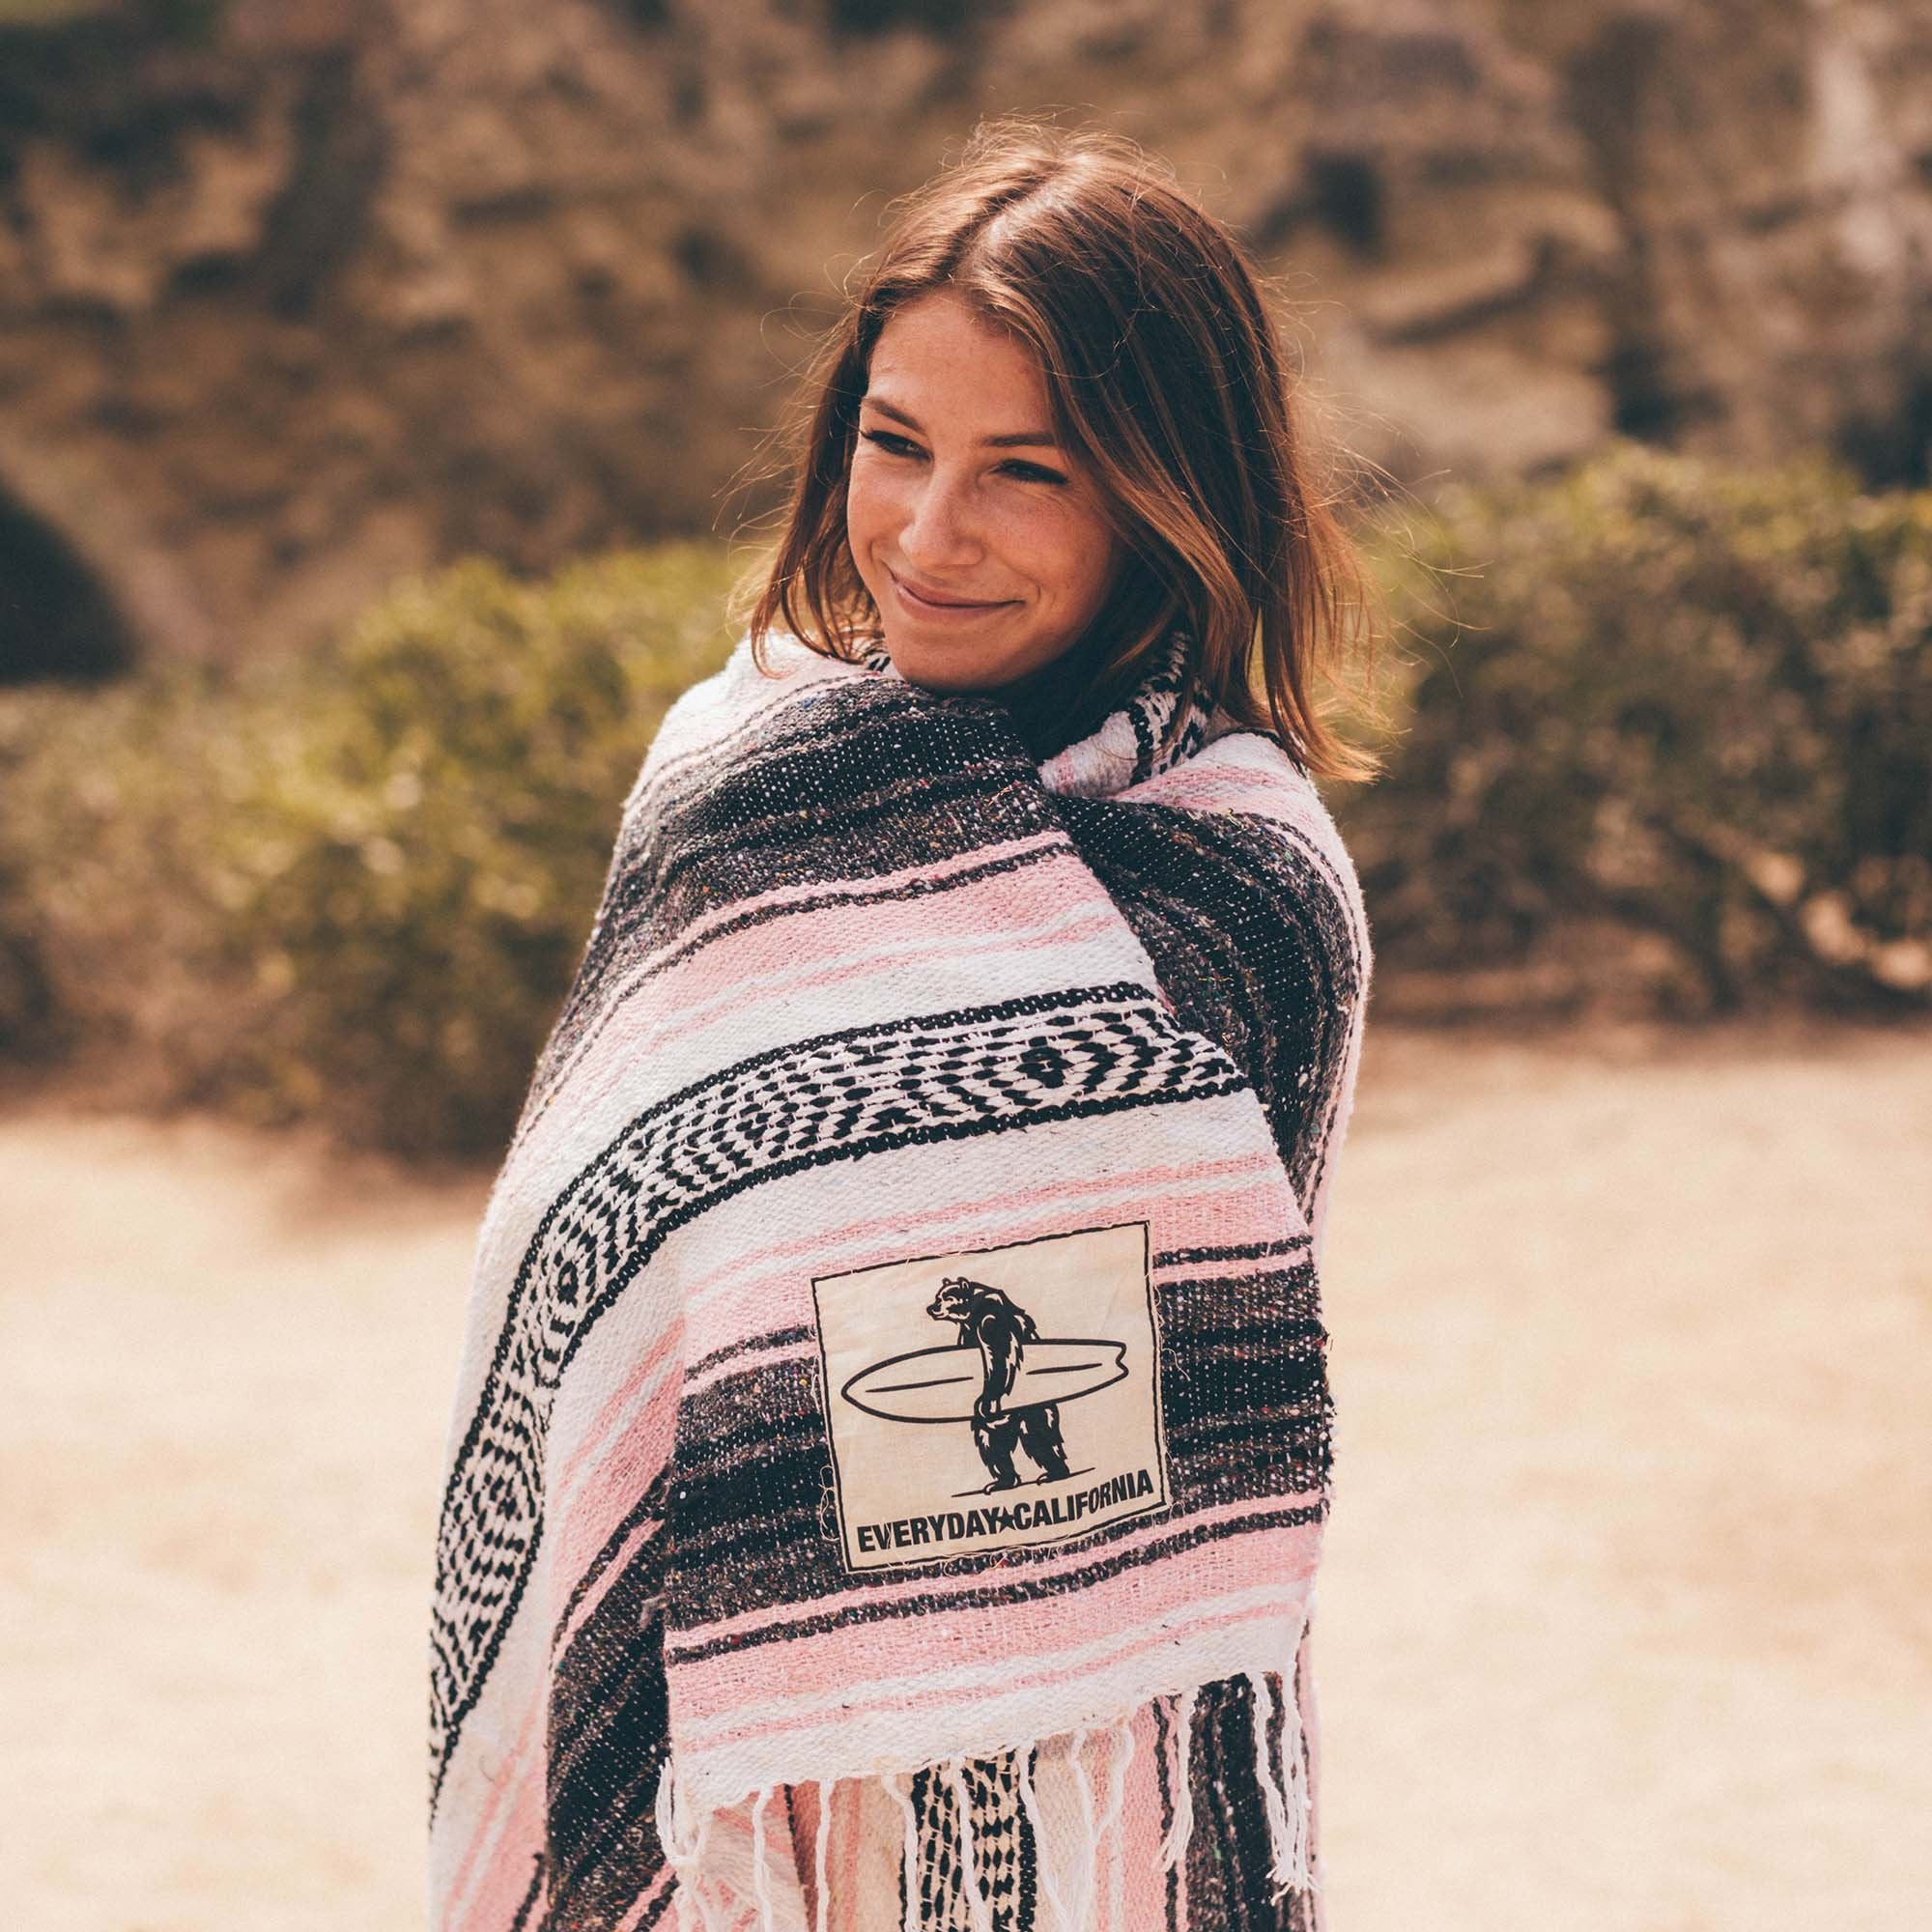 Everyday California Beach Baja Blanket on woman